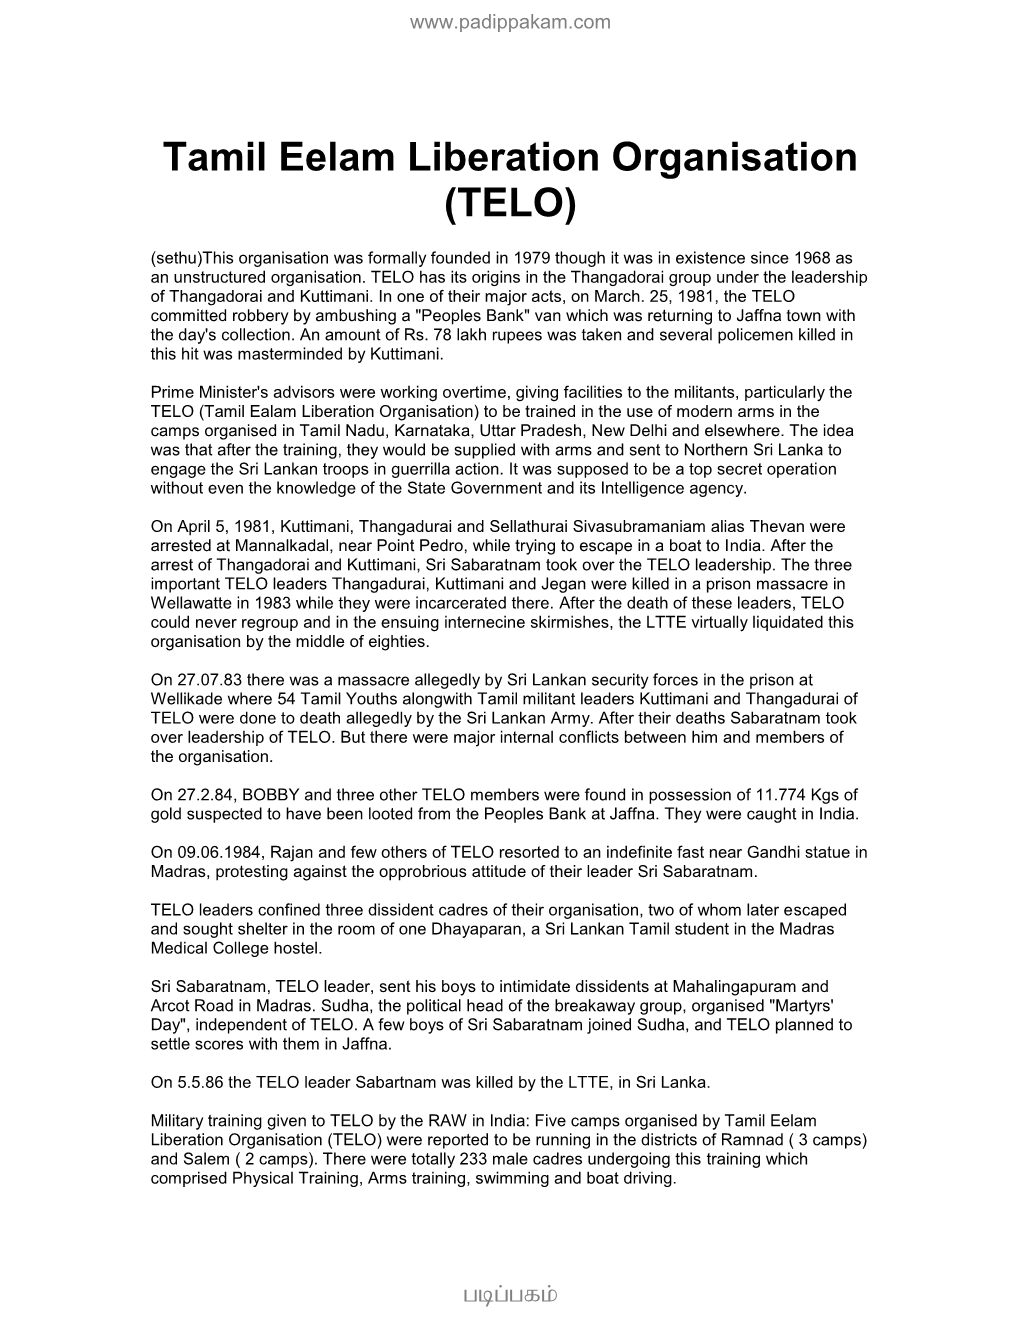 Tamil Eelam Liberation Organisation (TELO)